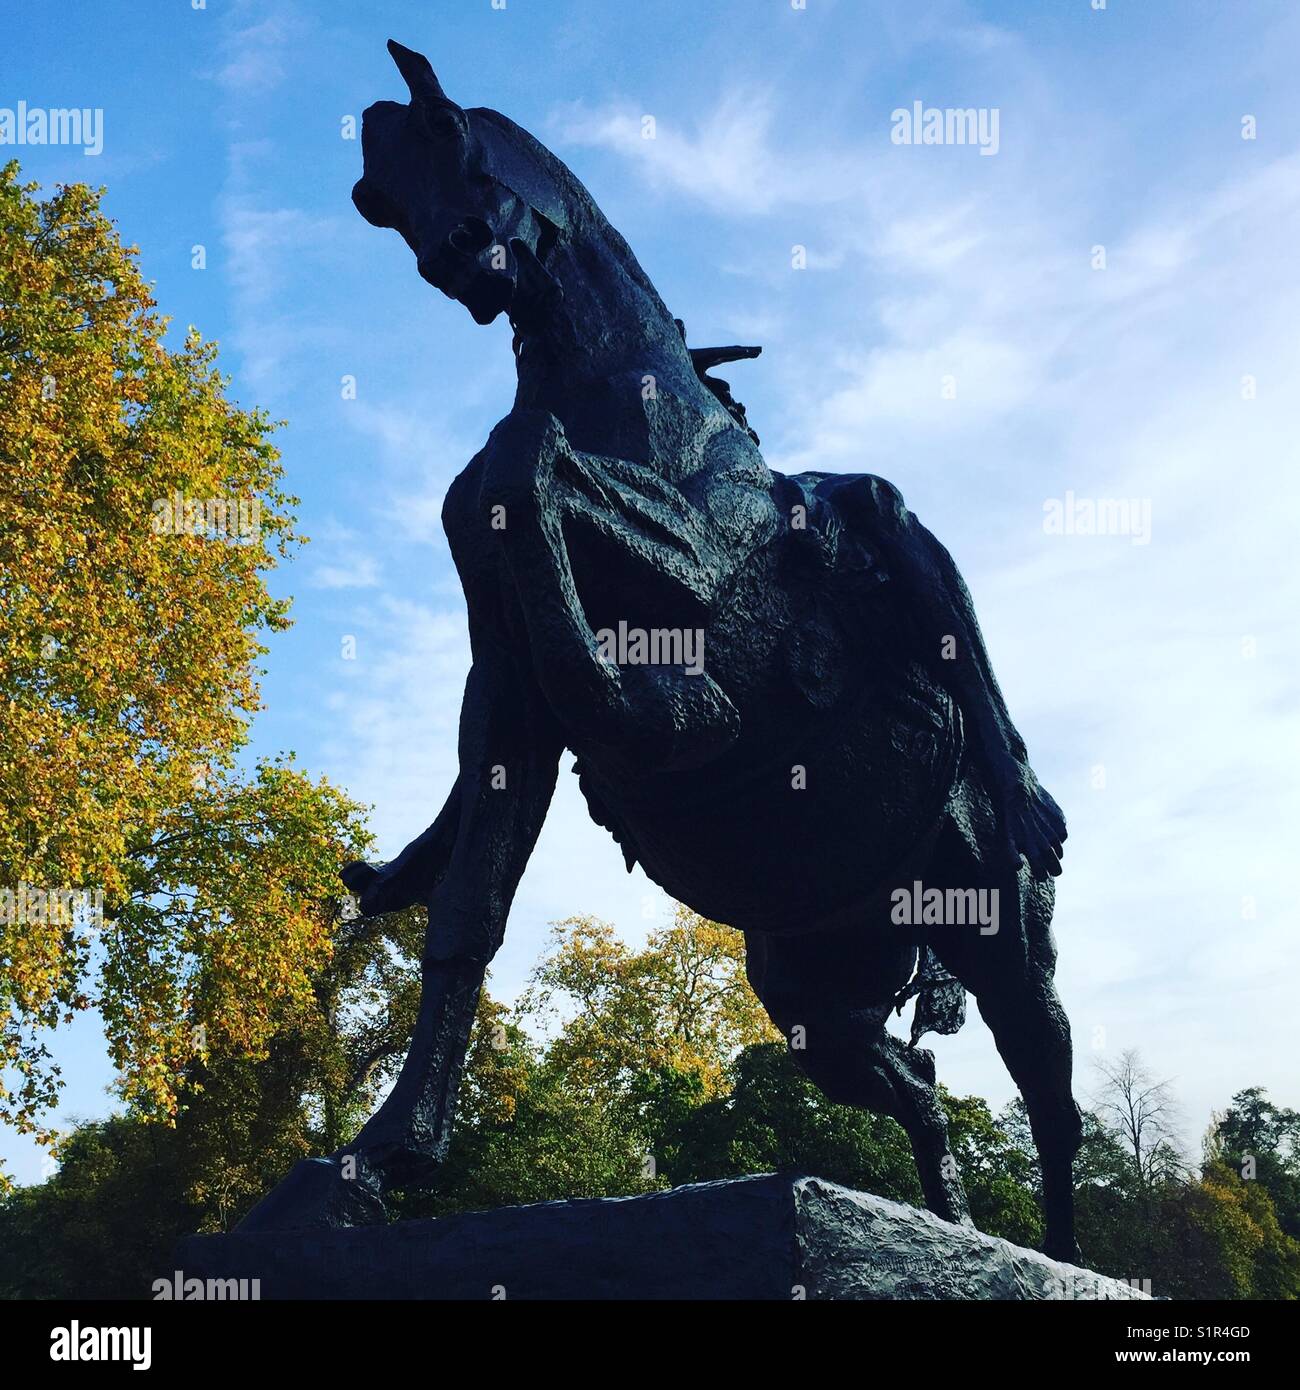 Black horse in London Stock Photo